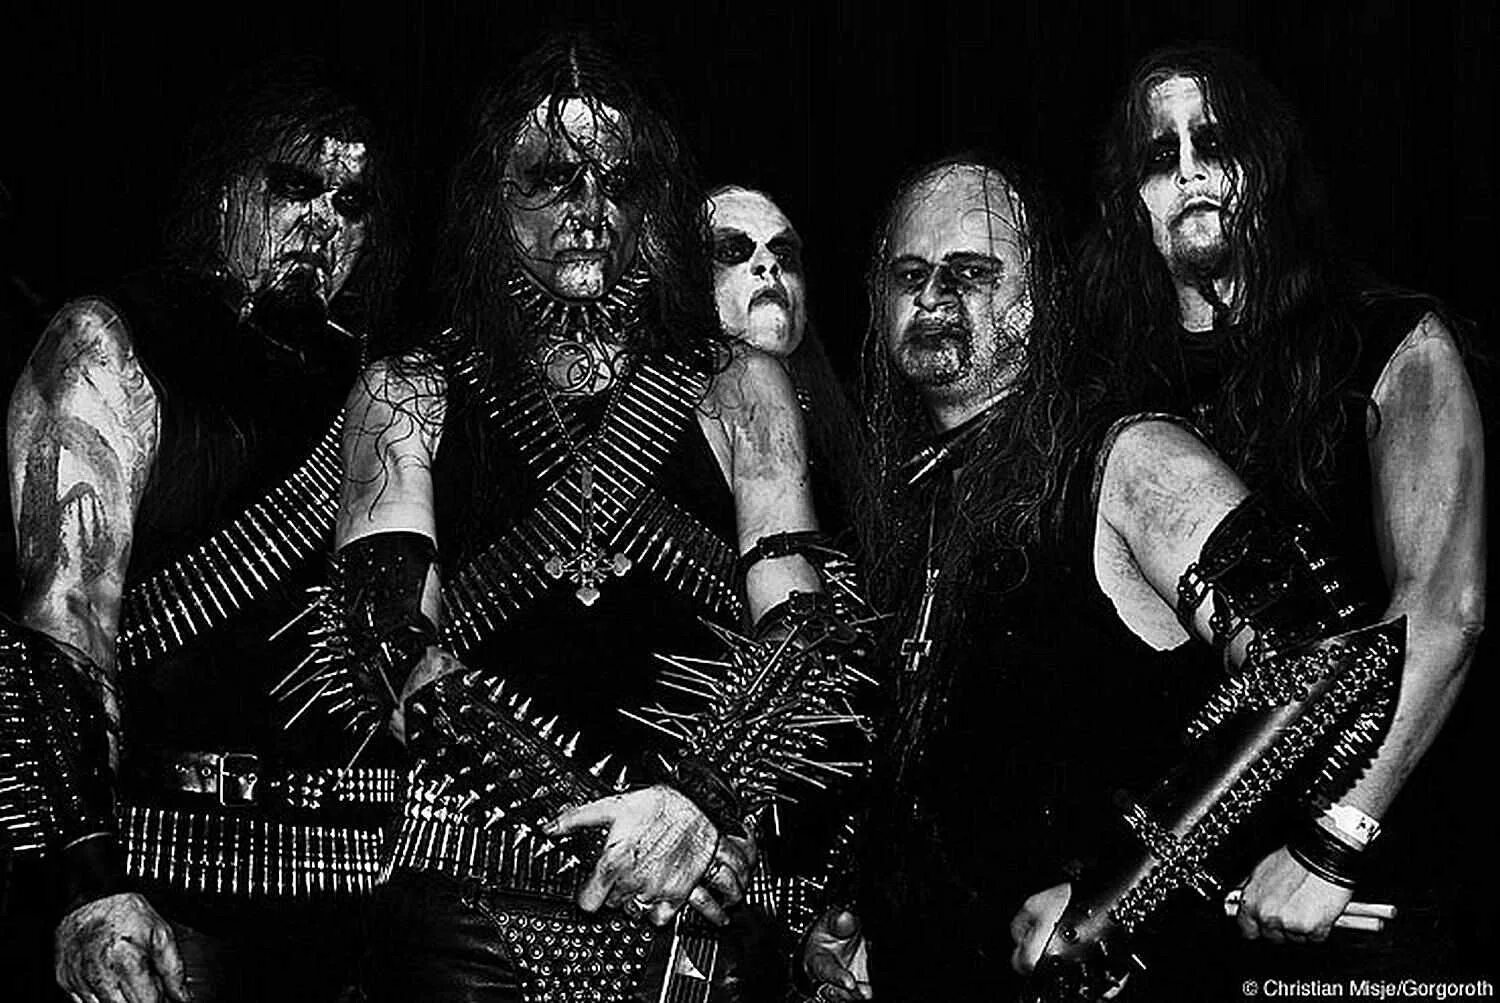 Клипы металл групп. Gorgoroth норвежский Блэк метал. Black Metal группа xwmcndjsjjdjdjrjd.